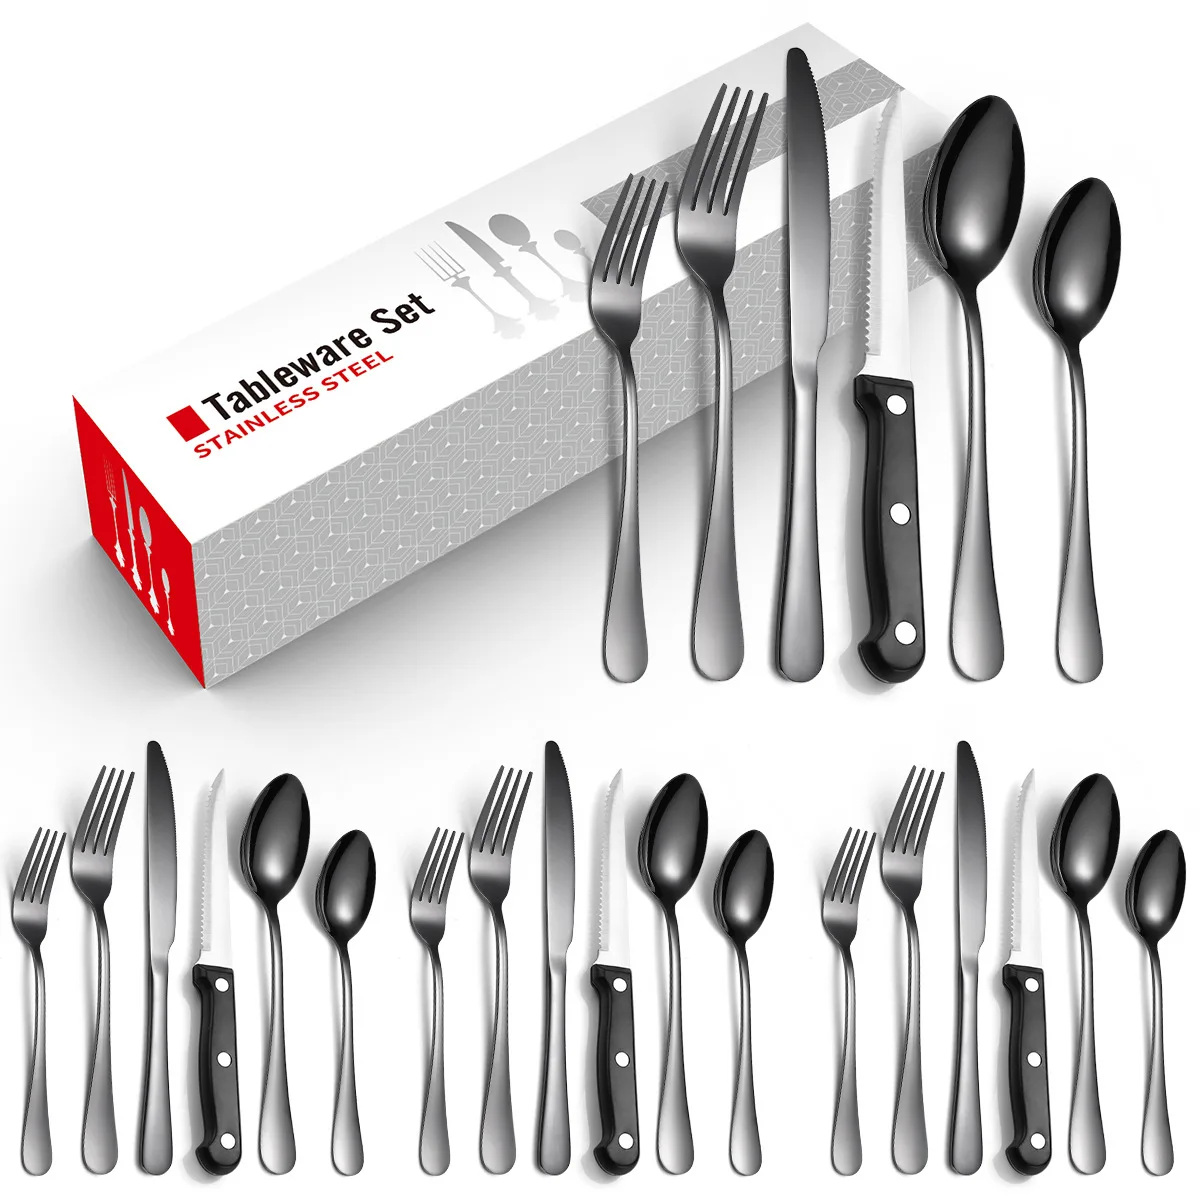 

Goldbaking 24 Pieces Silverware Set with Steak Knives Service 4 Stainless Steel Flatware Cutlery Utensil Tableware Fork Spoon